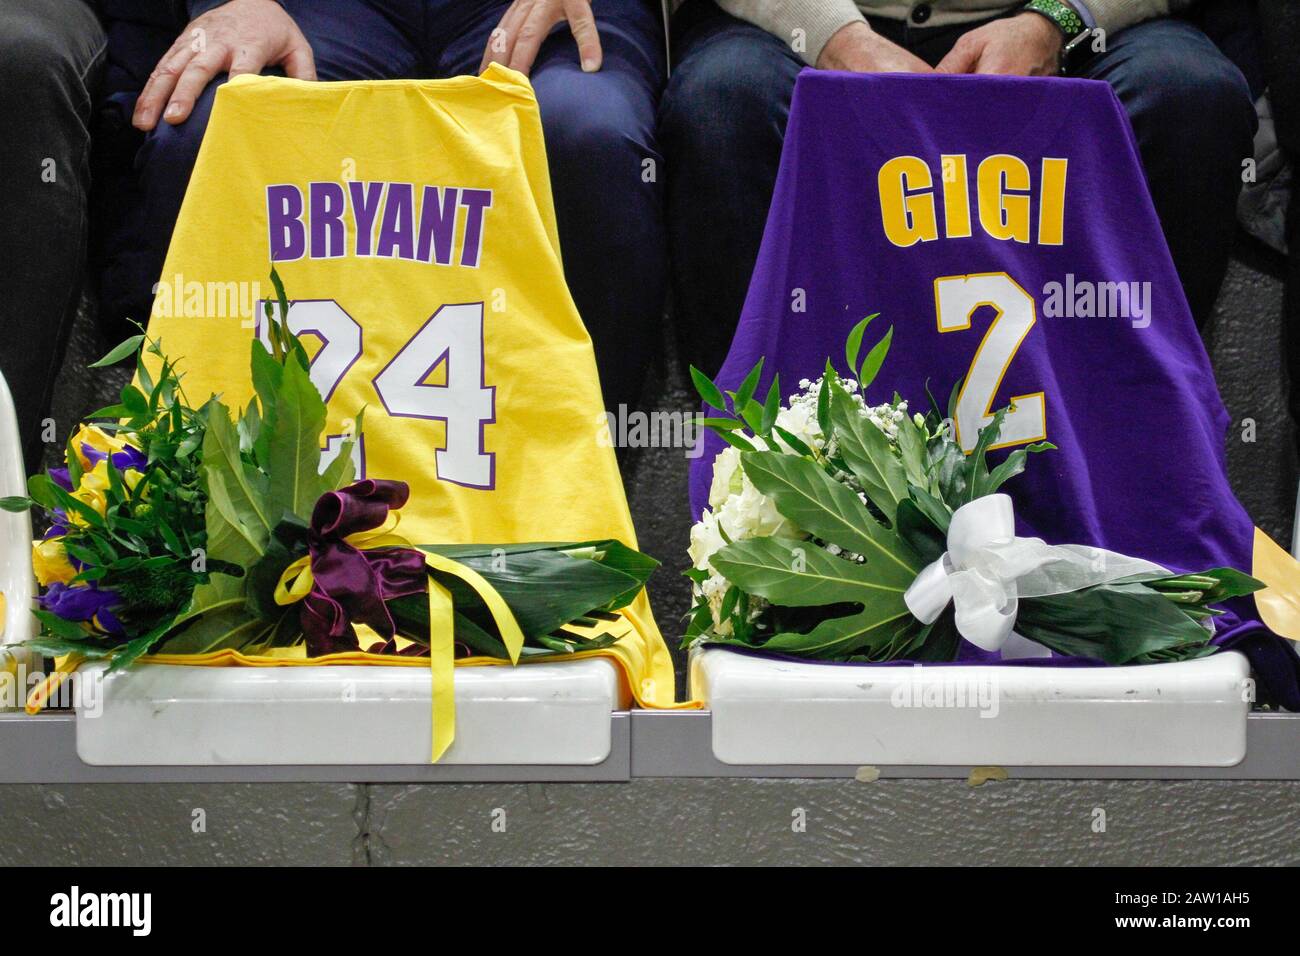 kobe and gigi bryant jerseys during Kobe Bryant commemoration, Rieti, Italy, 05 Feb 2020, Basketball Event Stock Photo